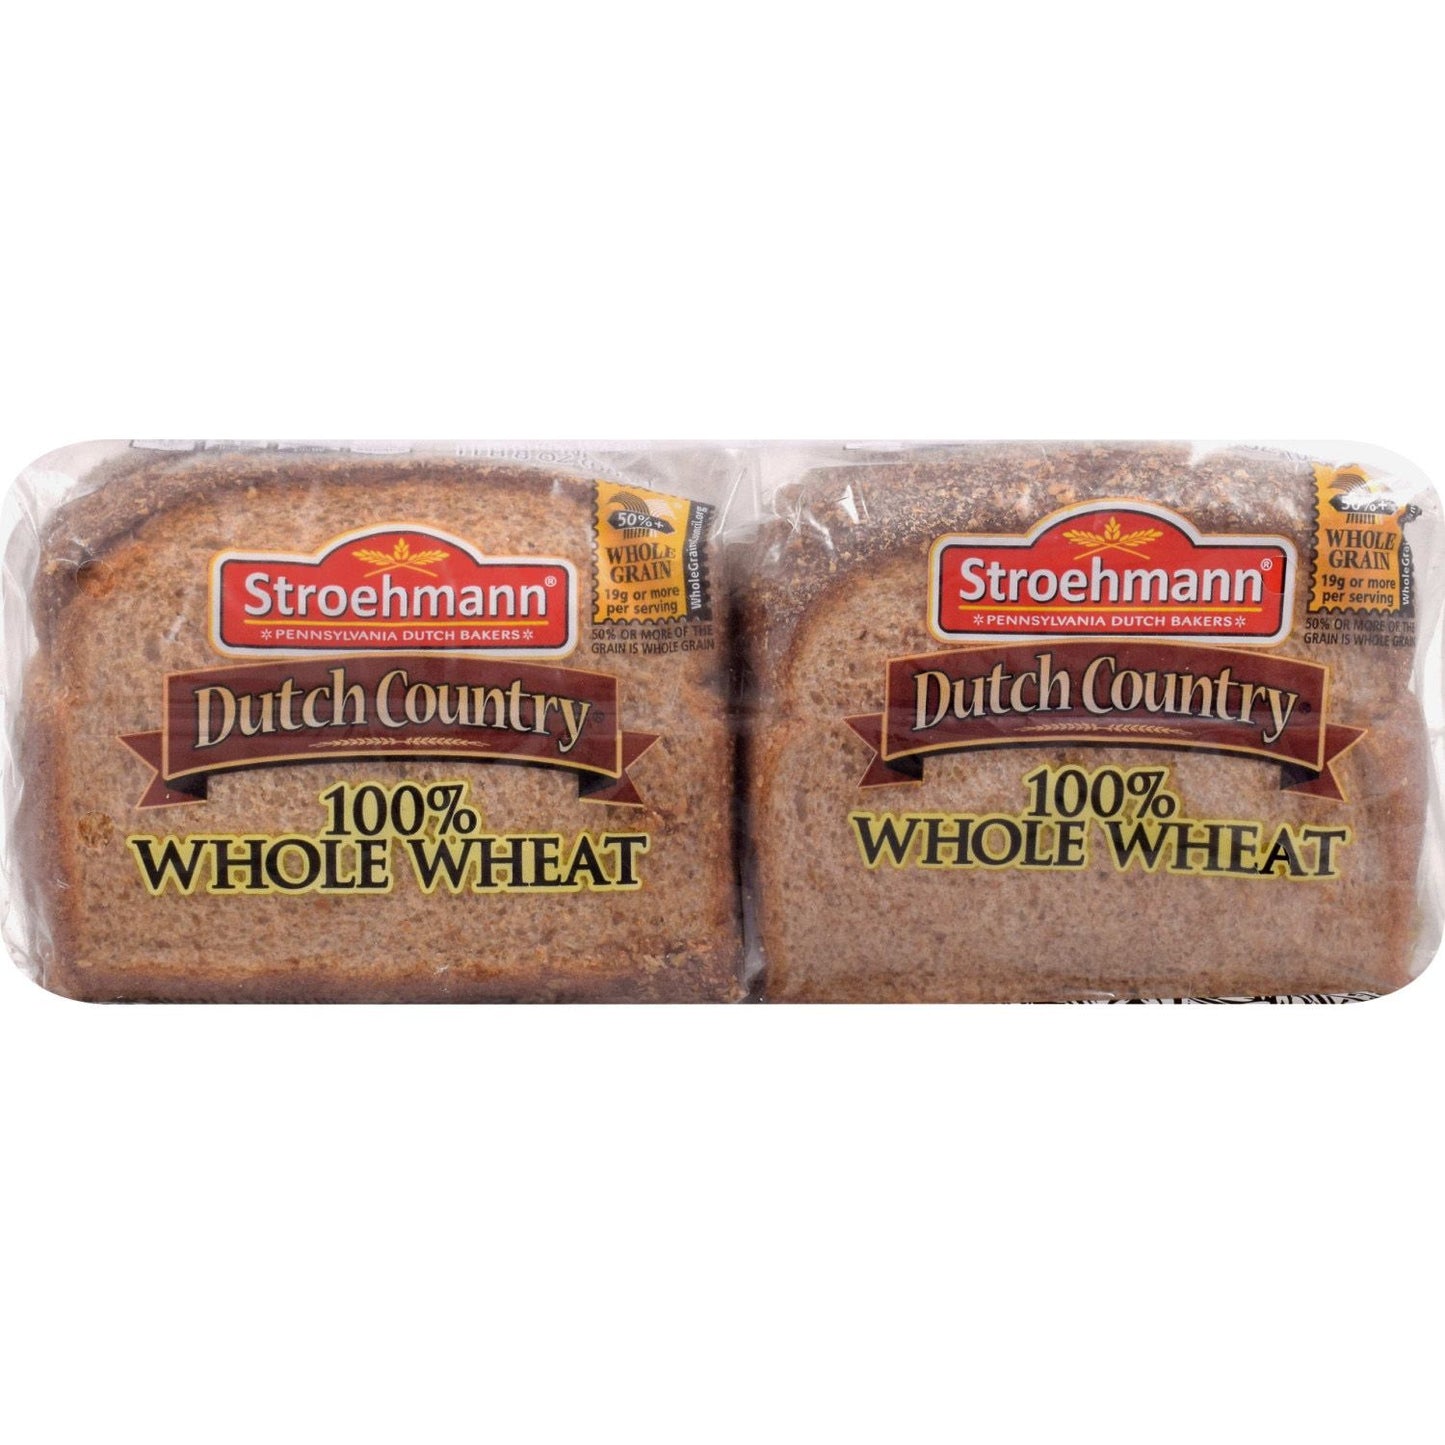 Stroehmann Dutch Country 100% Whole Wheat - 24 oz. - 2 ct.